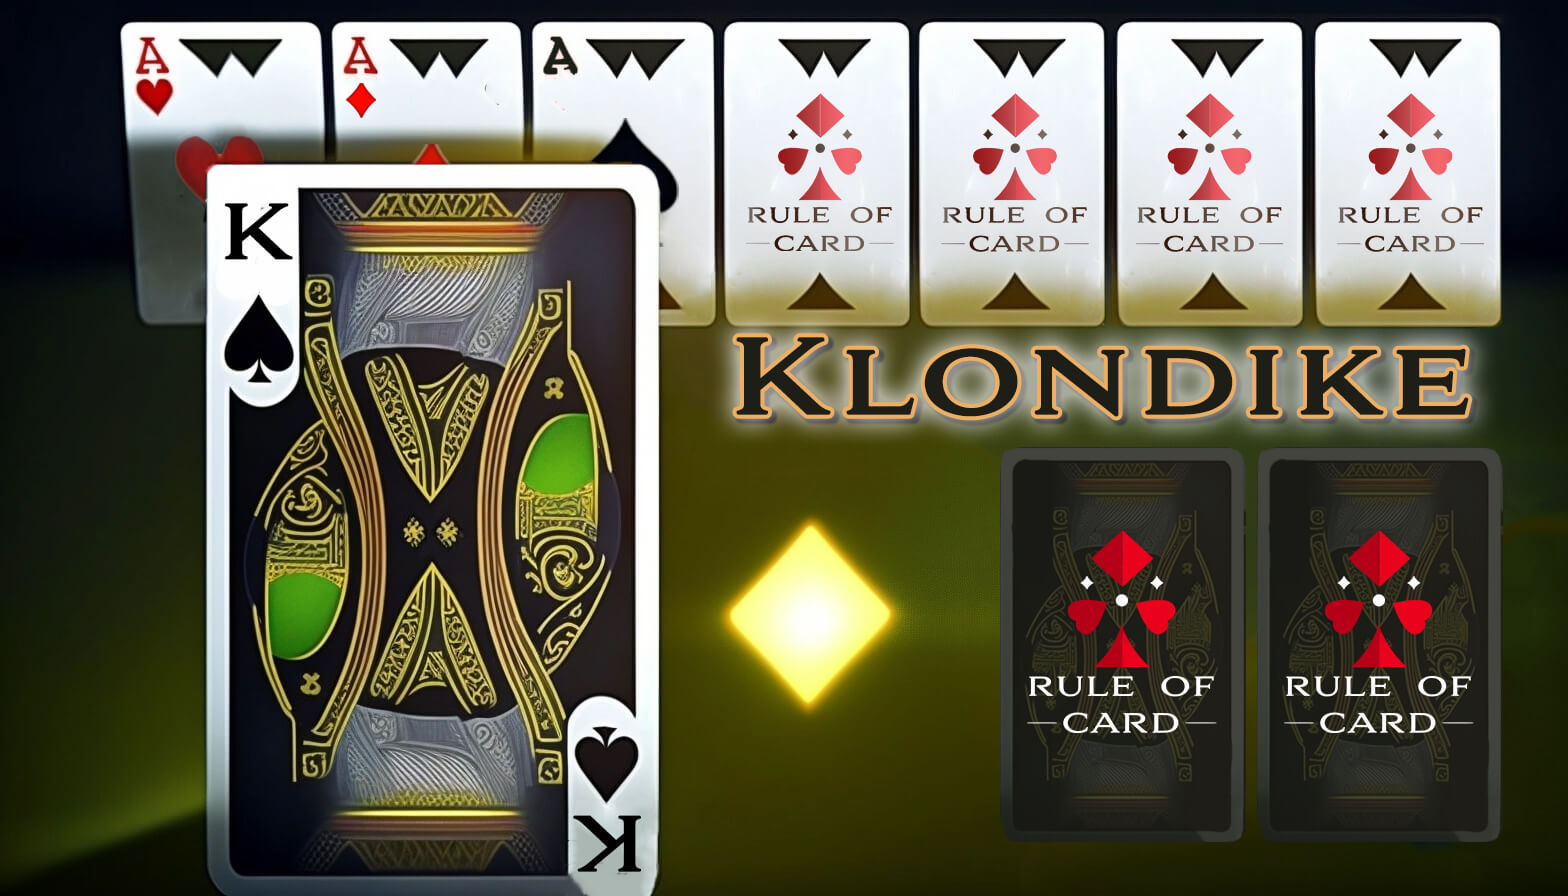 Playing the card game Klondike